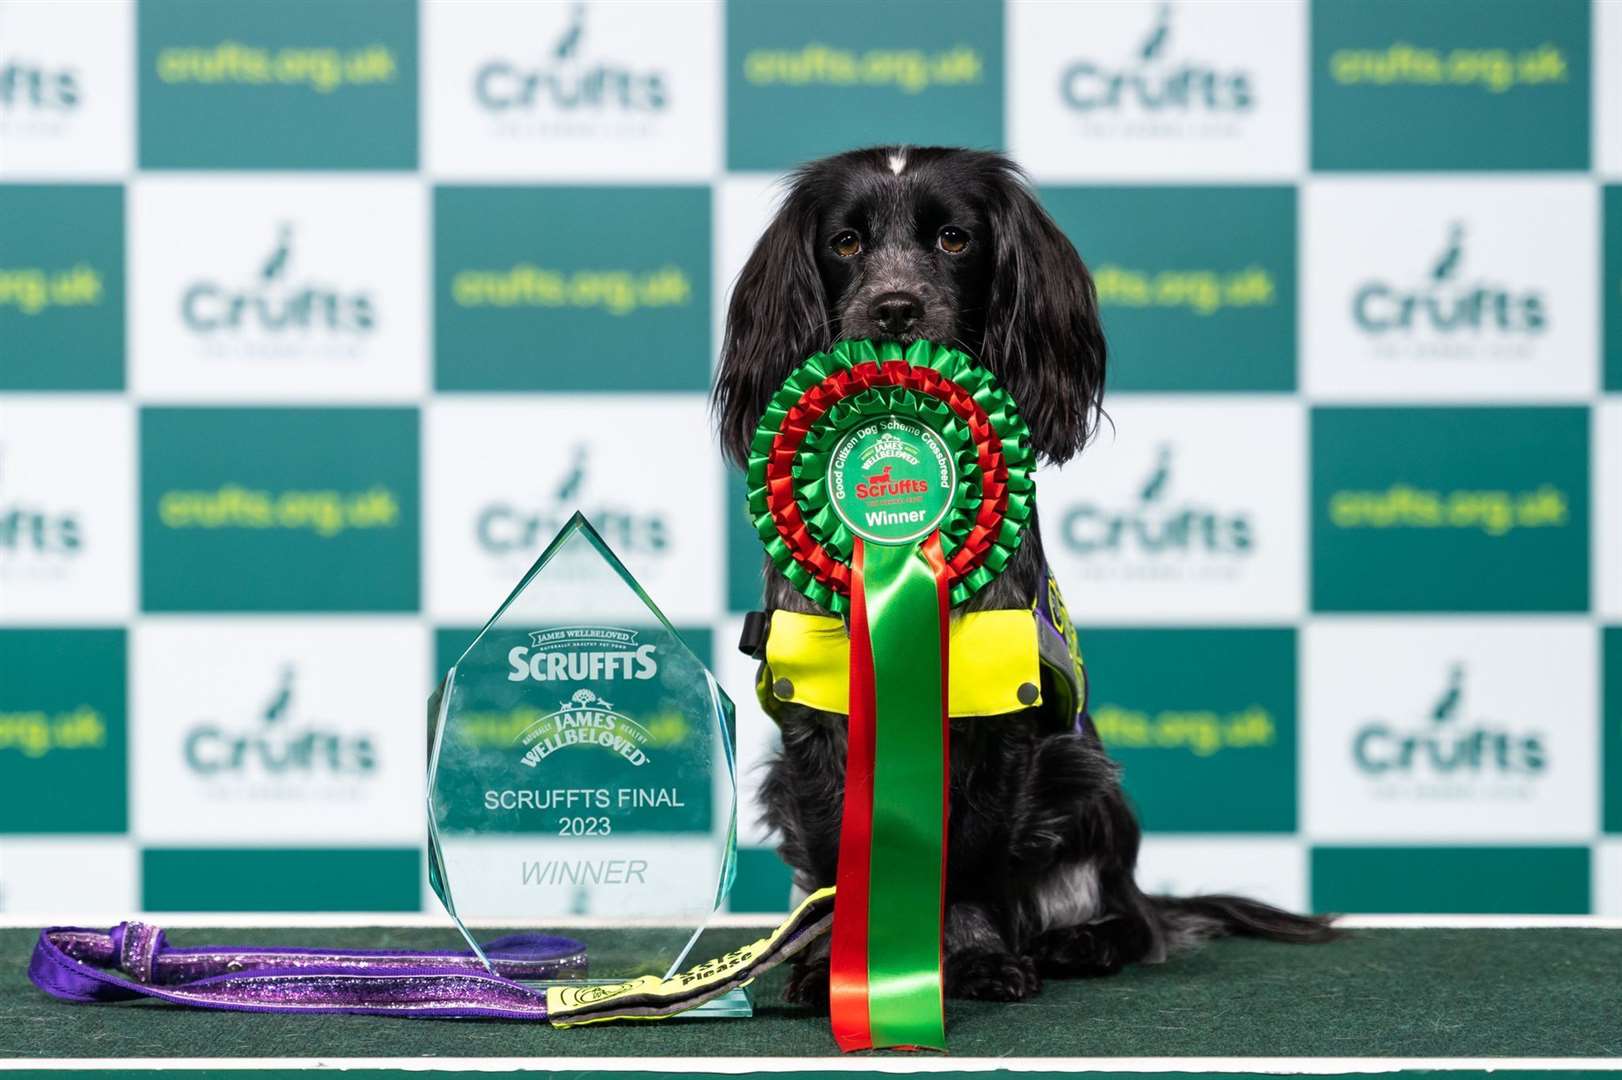 The Scruffts Good Citizen Dog Scheme winner, Delila. Picture: BeatMedia/The Kennel Club